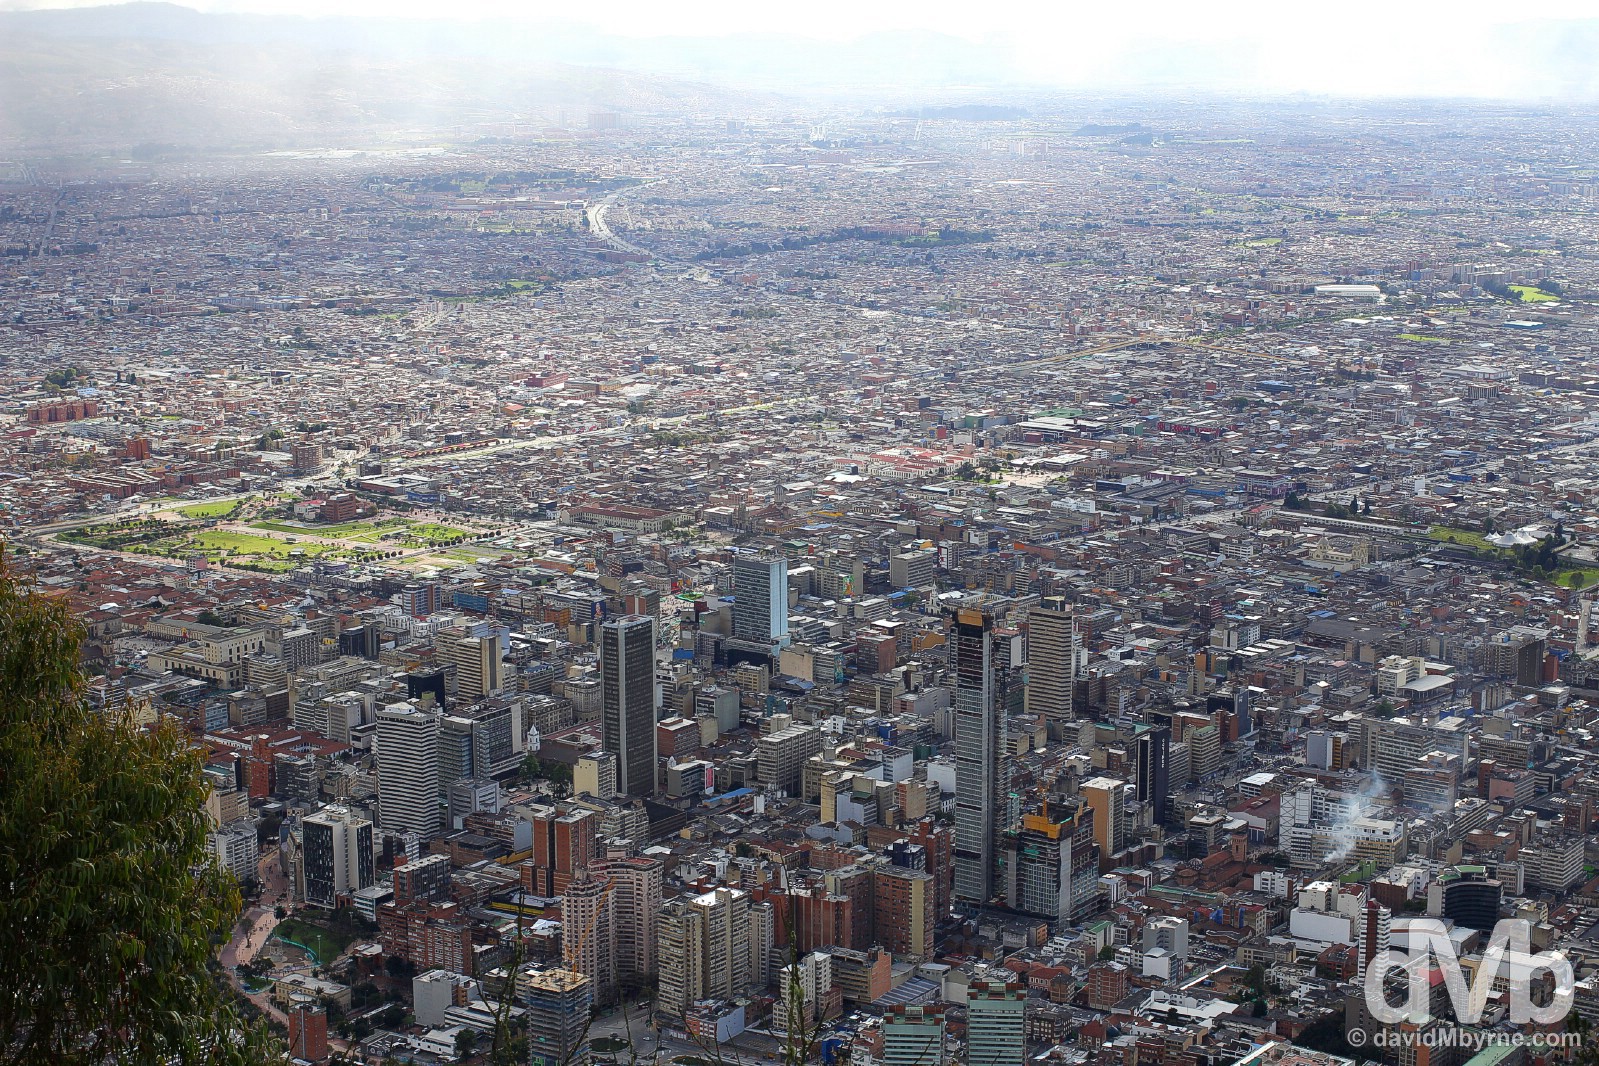 The city of Bogota as seen from Cerro de Monserrate overlooking the city. Bogota, Colombia. June 28, 2015. 